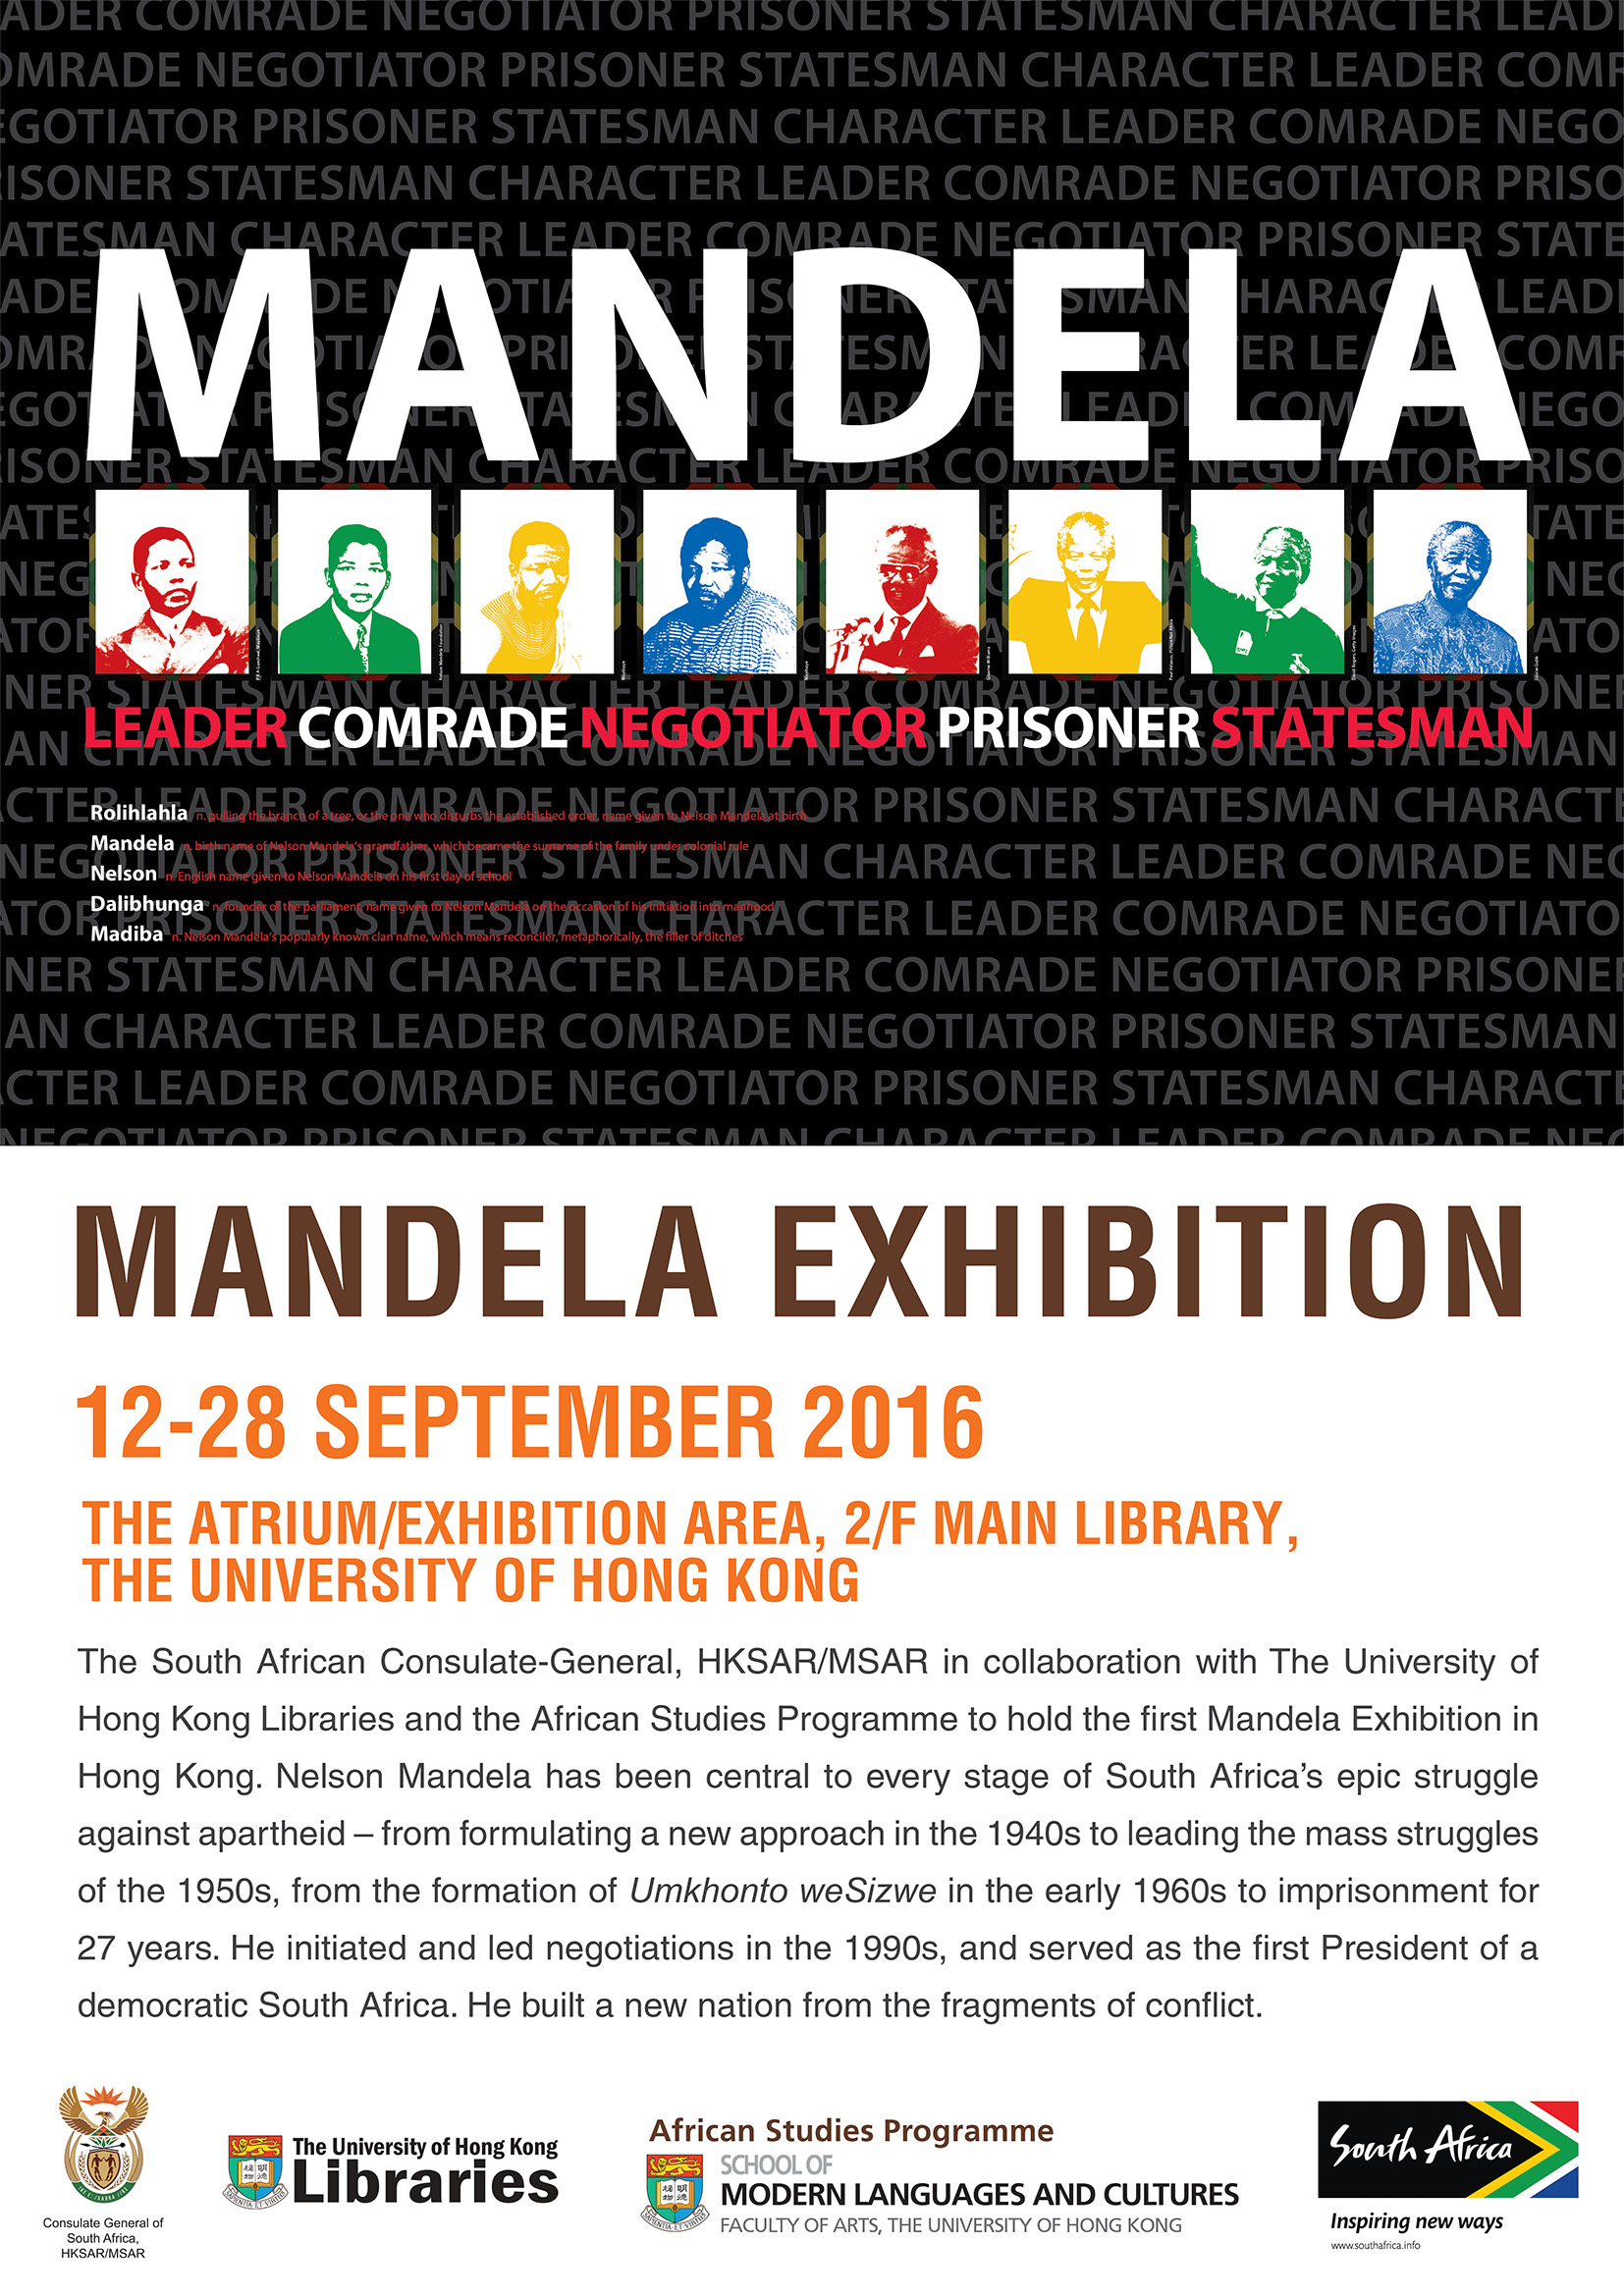 First Mandela Exhibition in Hong Kong